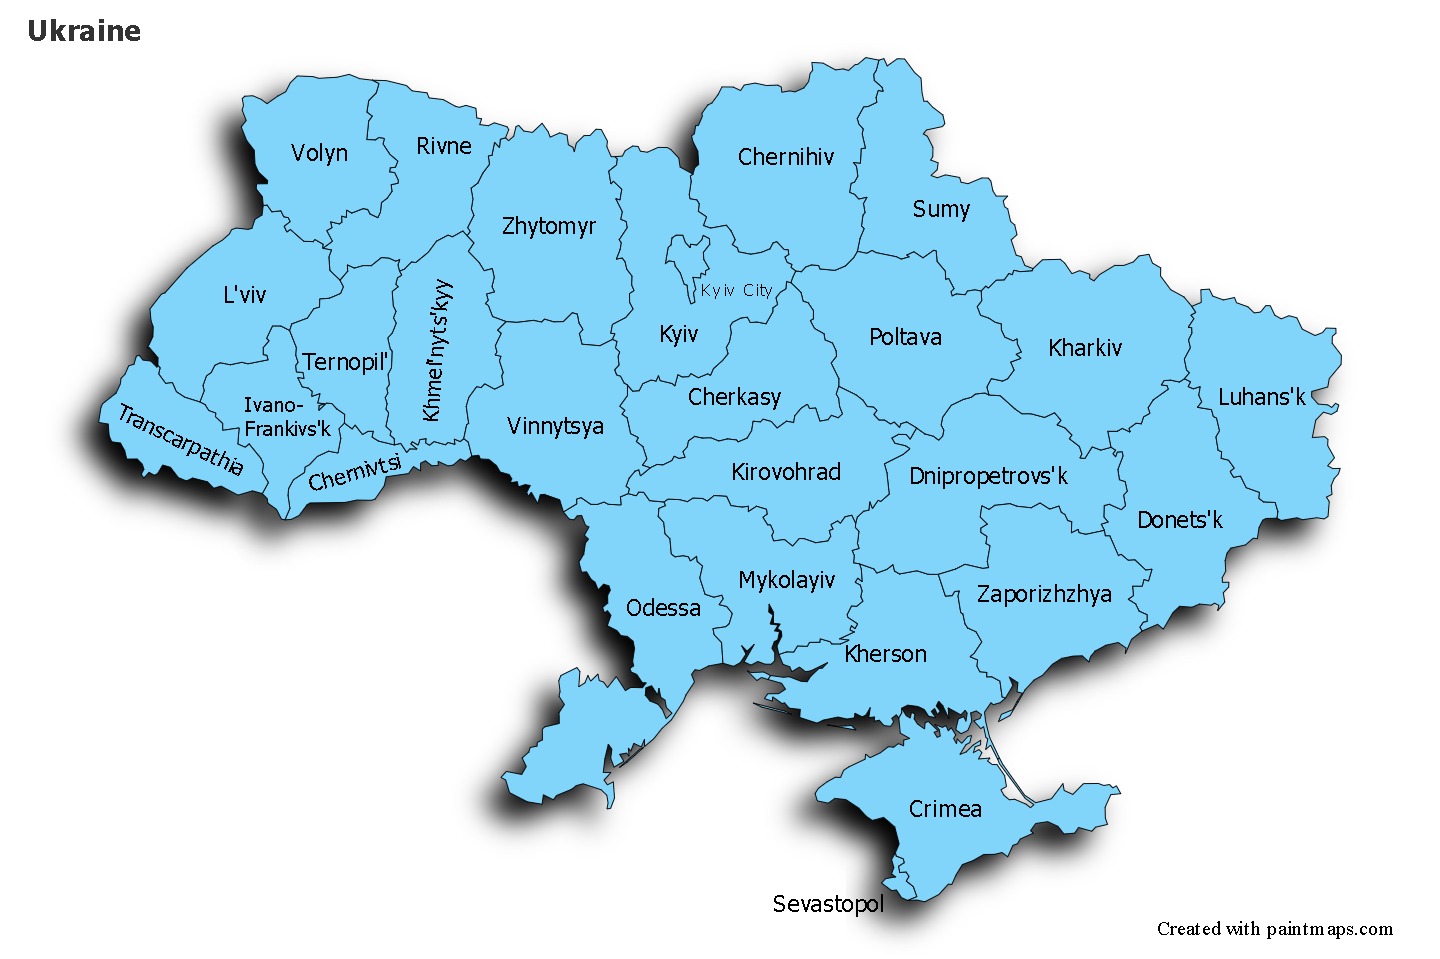 Ukraine regions. Карта Украины. Области Украины. Map of Ukraine with Regions. Ukraine County Map.